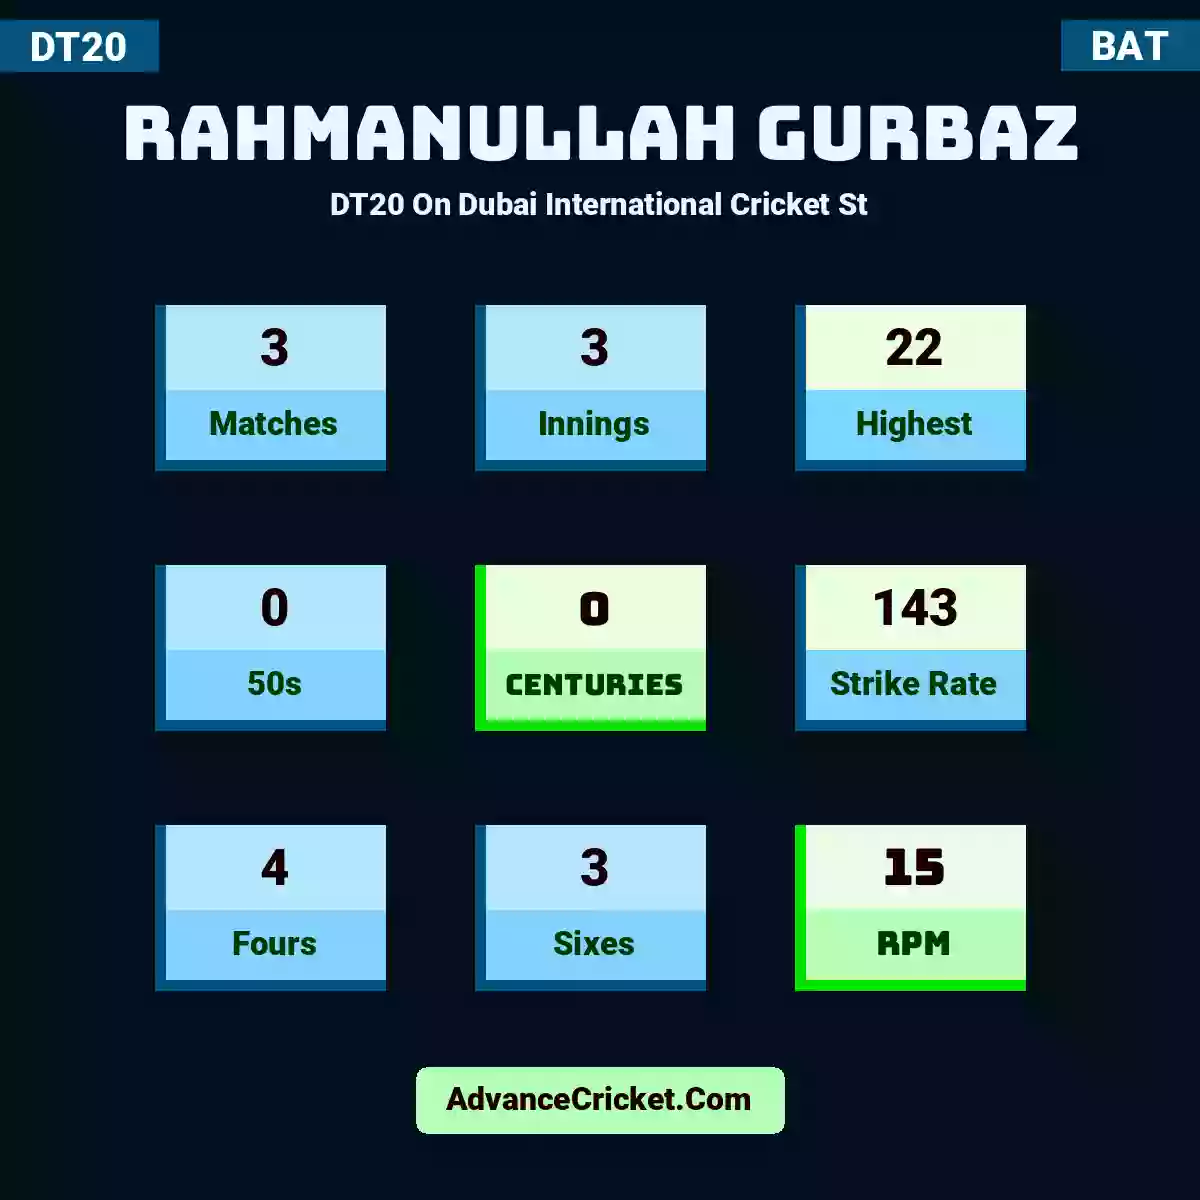 Rahmanullah Gurbaz DT20  On Dubai International Cricket St, Rahmanullah Gurbaz played 3 matches, scored 22 runs as highest, 0 half-centuries, and 0 centuries, with a strike rate of 143. R.Gurbaz hit 4 fours and 3 sixes, with an RPM of 15.